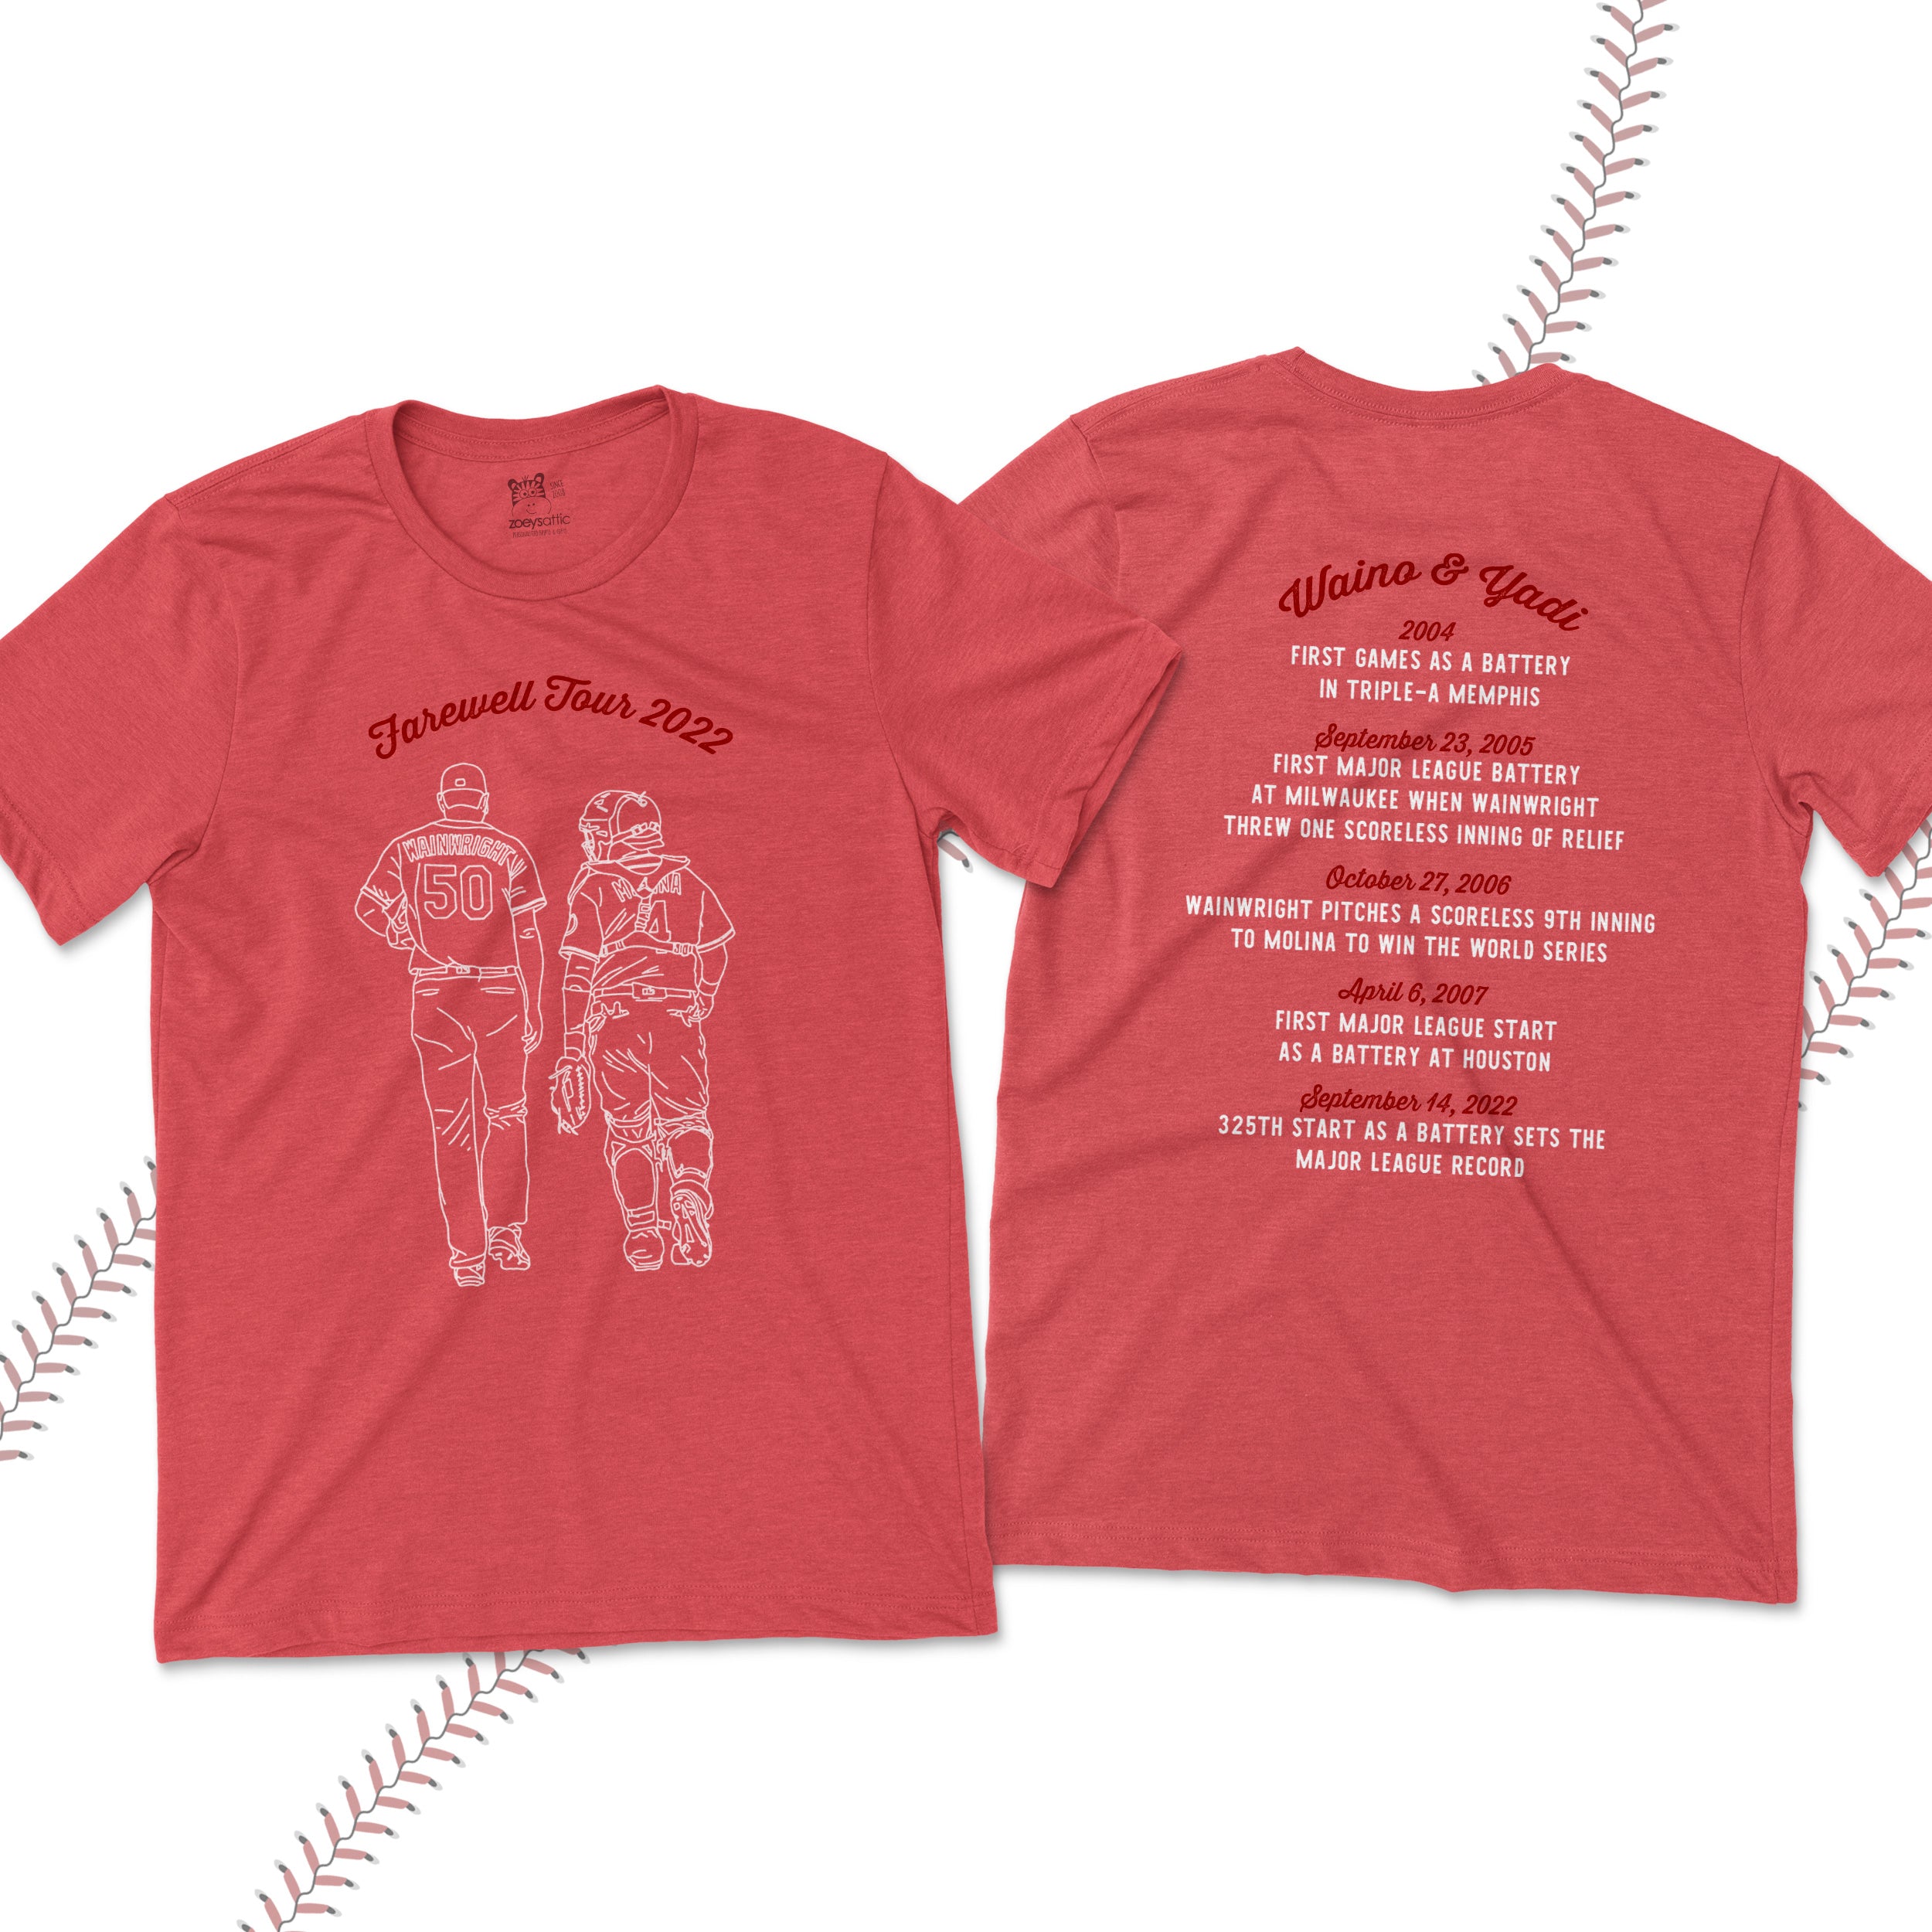 Yadi Waino Pujols One Last Run 2022 Cardinals T-Shirt (Copy